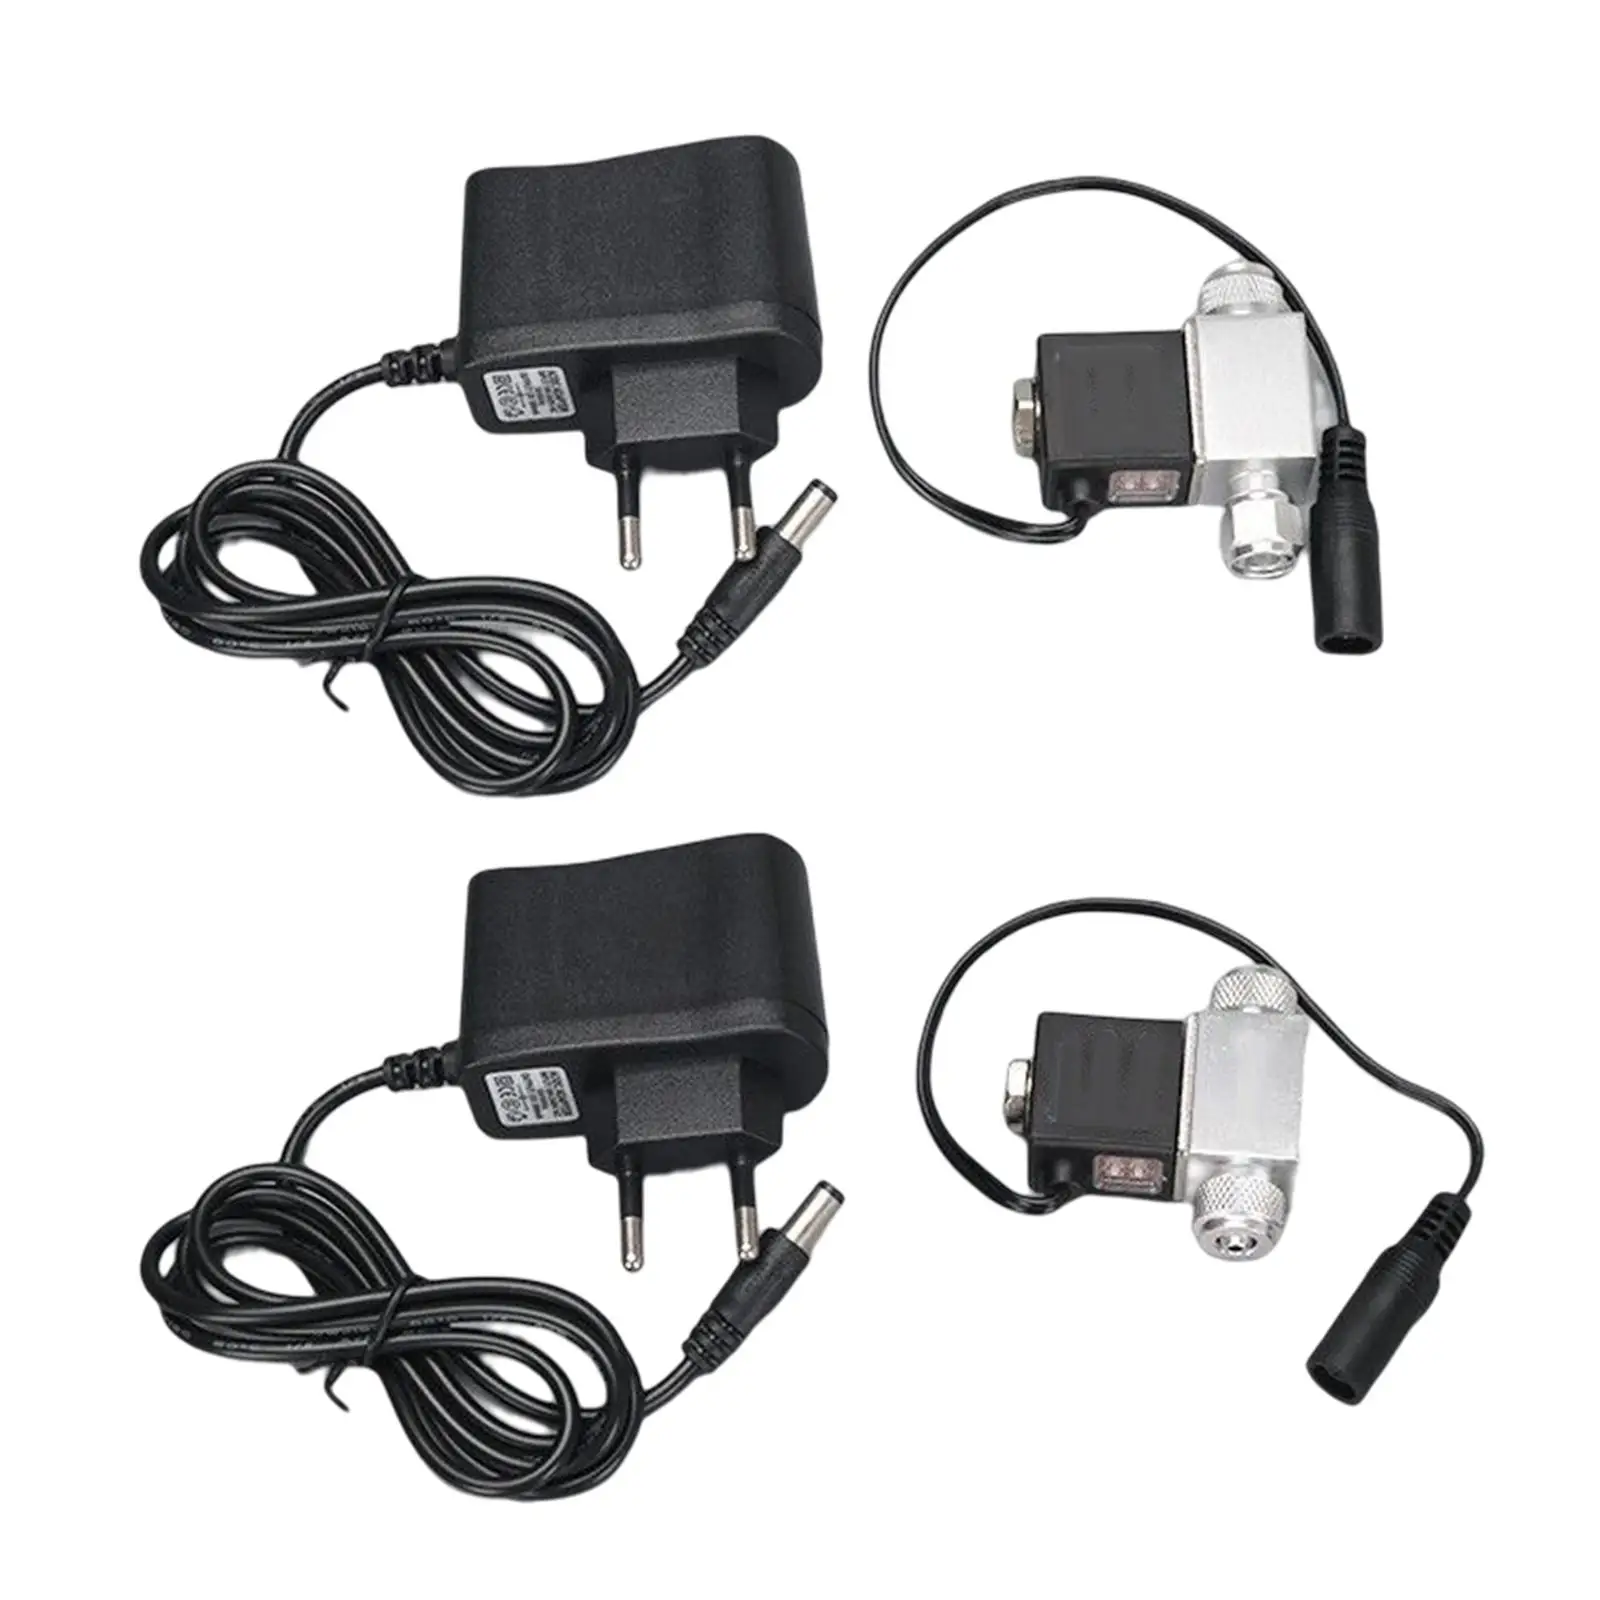 Electromagnetic Valve Fish Tank Accessories Electric Valve control devices Pressure Regulator CO2 Solenoid Valve Regulator